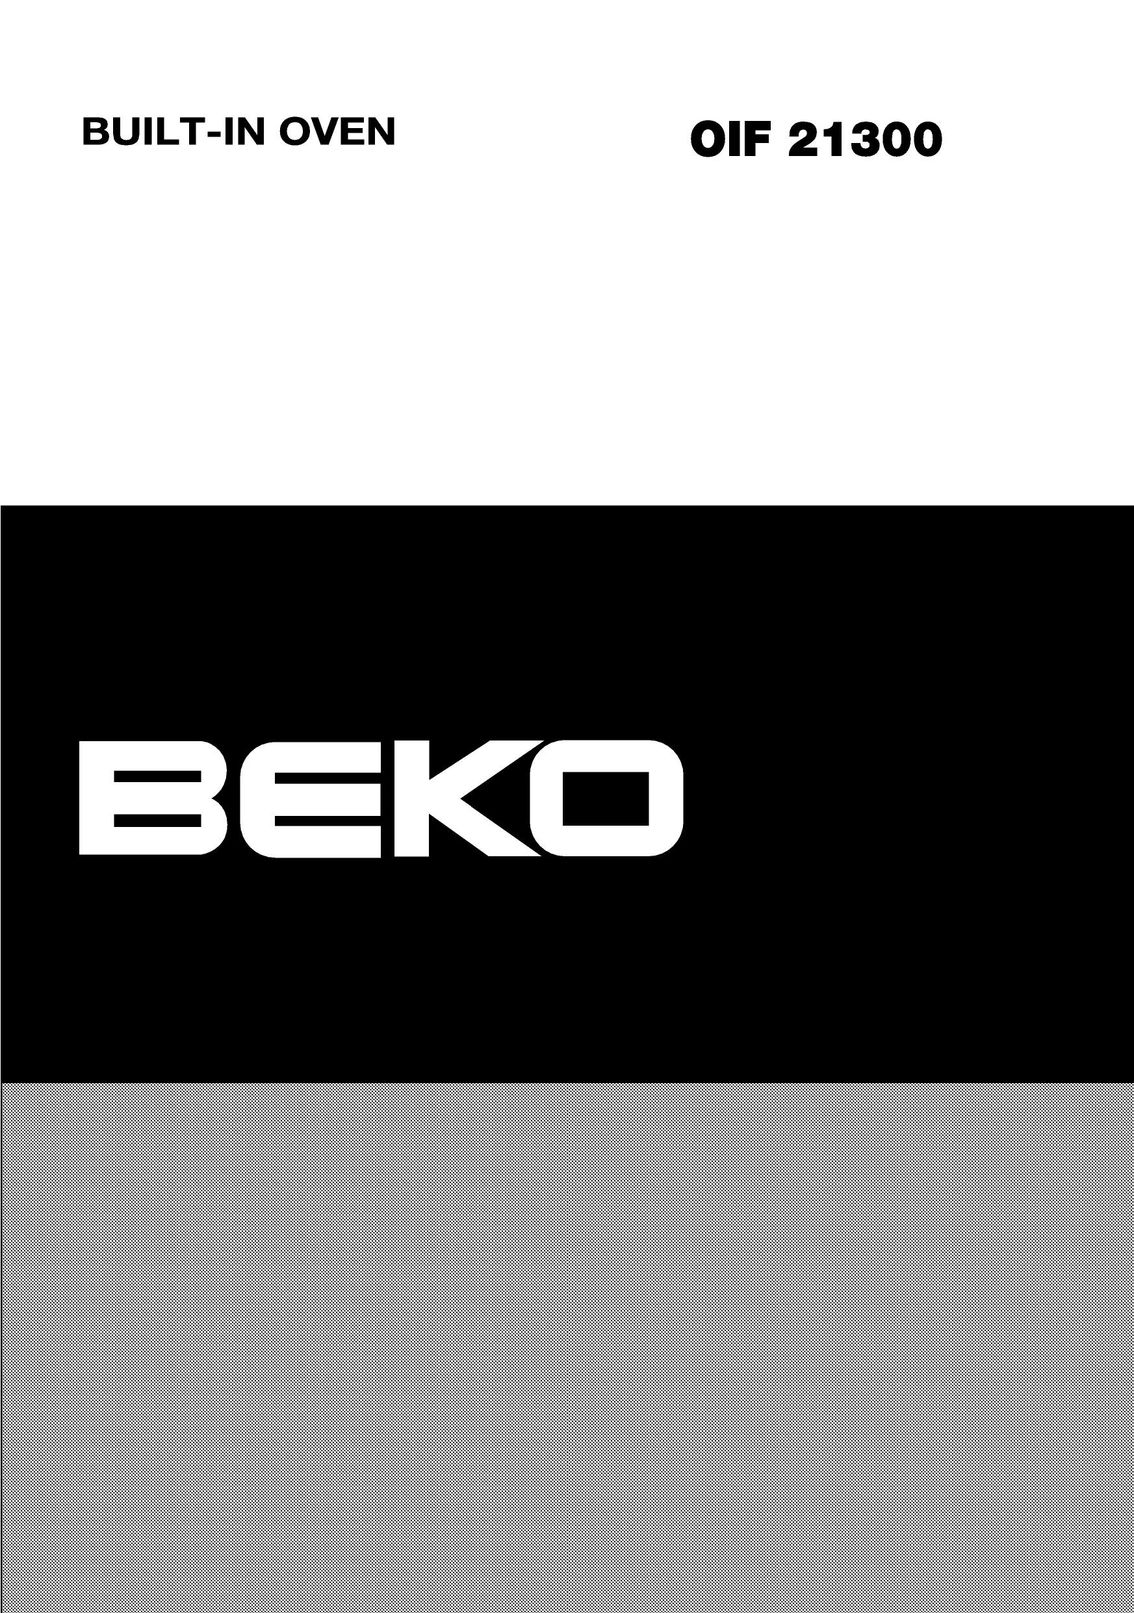 Beko OIF 21300 Oven User Manual